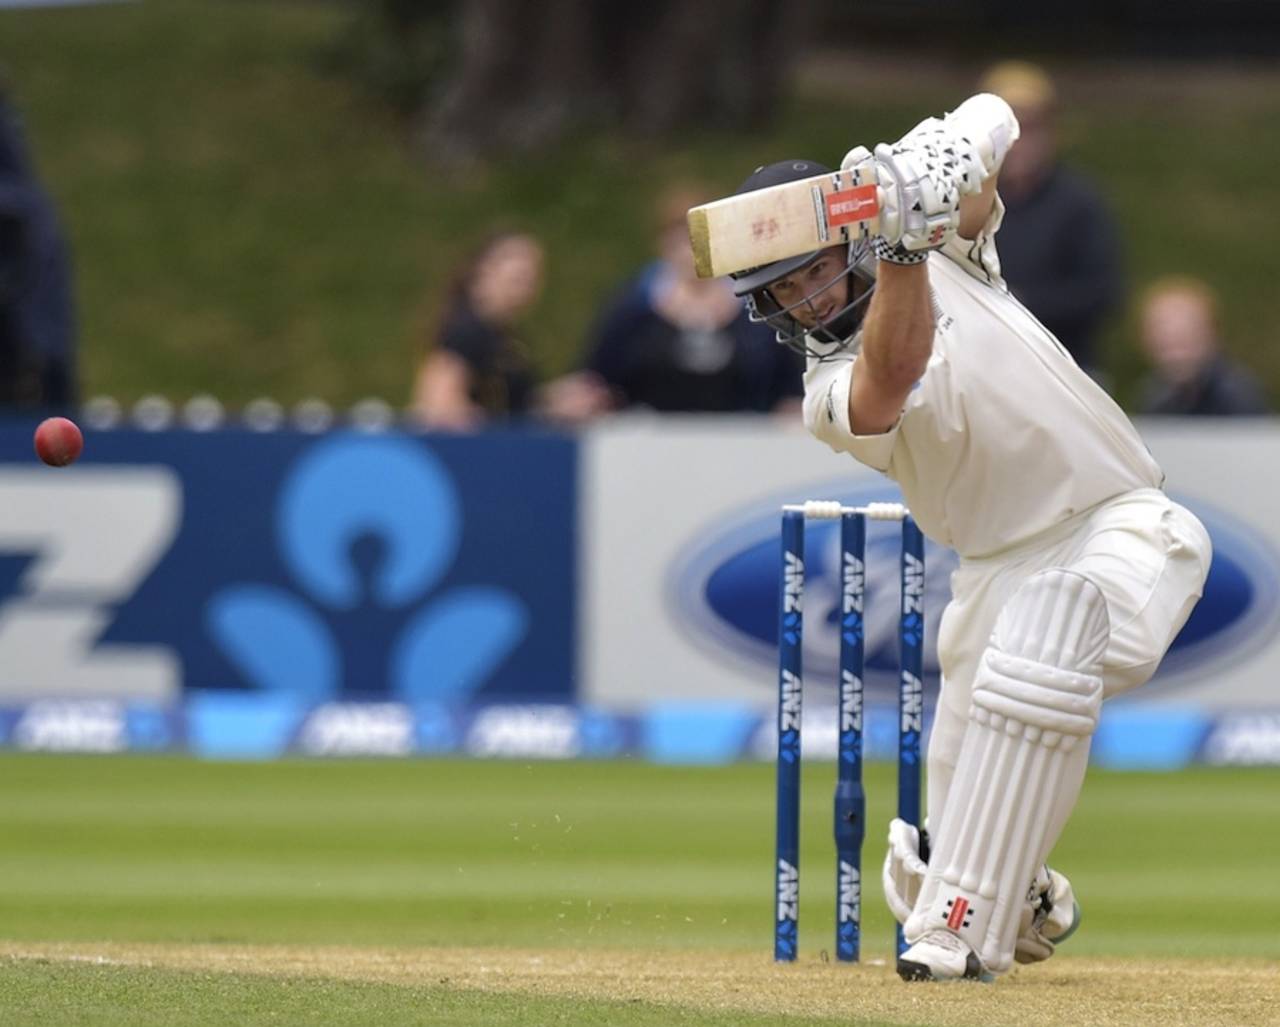 Kane Williamson cover drives during his hundred, New Zealand v Sri Lanka, 2nd Test, Wellington, 4th day, January 6, 2015